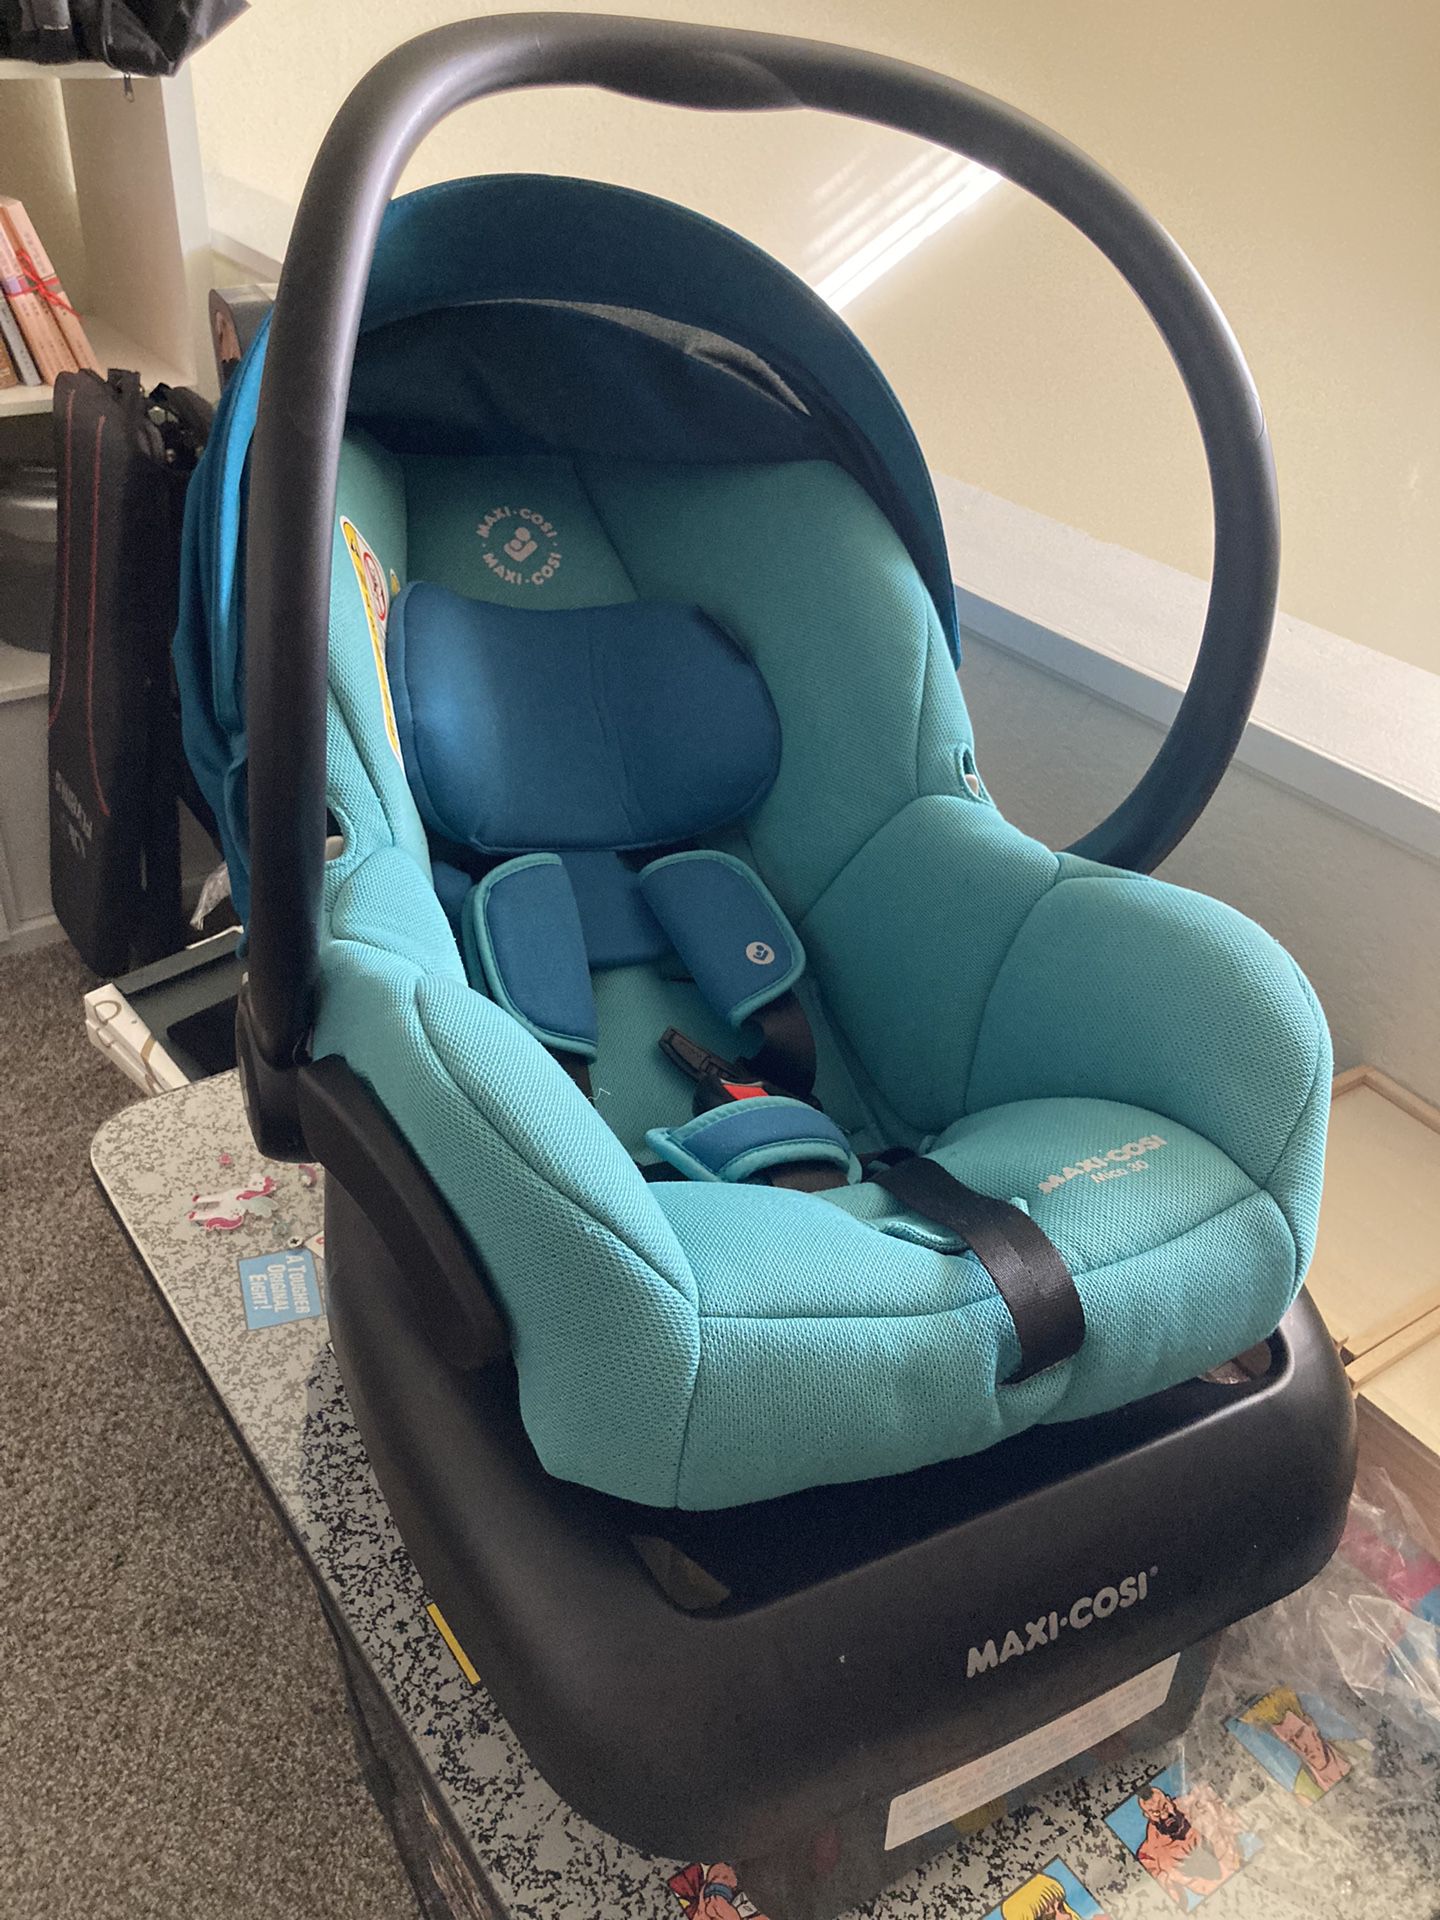 Maxi-Cosi Maxi-Cosi Mico 30 Infant Car Seat, Rear-Facing for Babies from 4-30 lbs